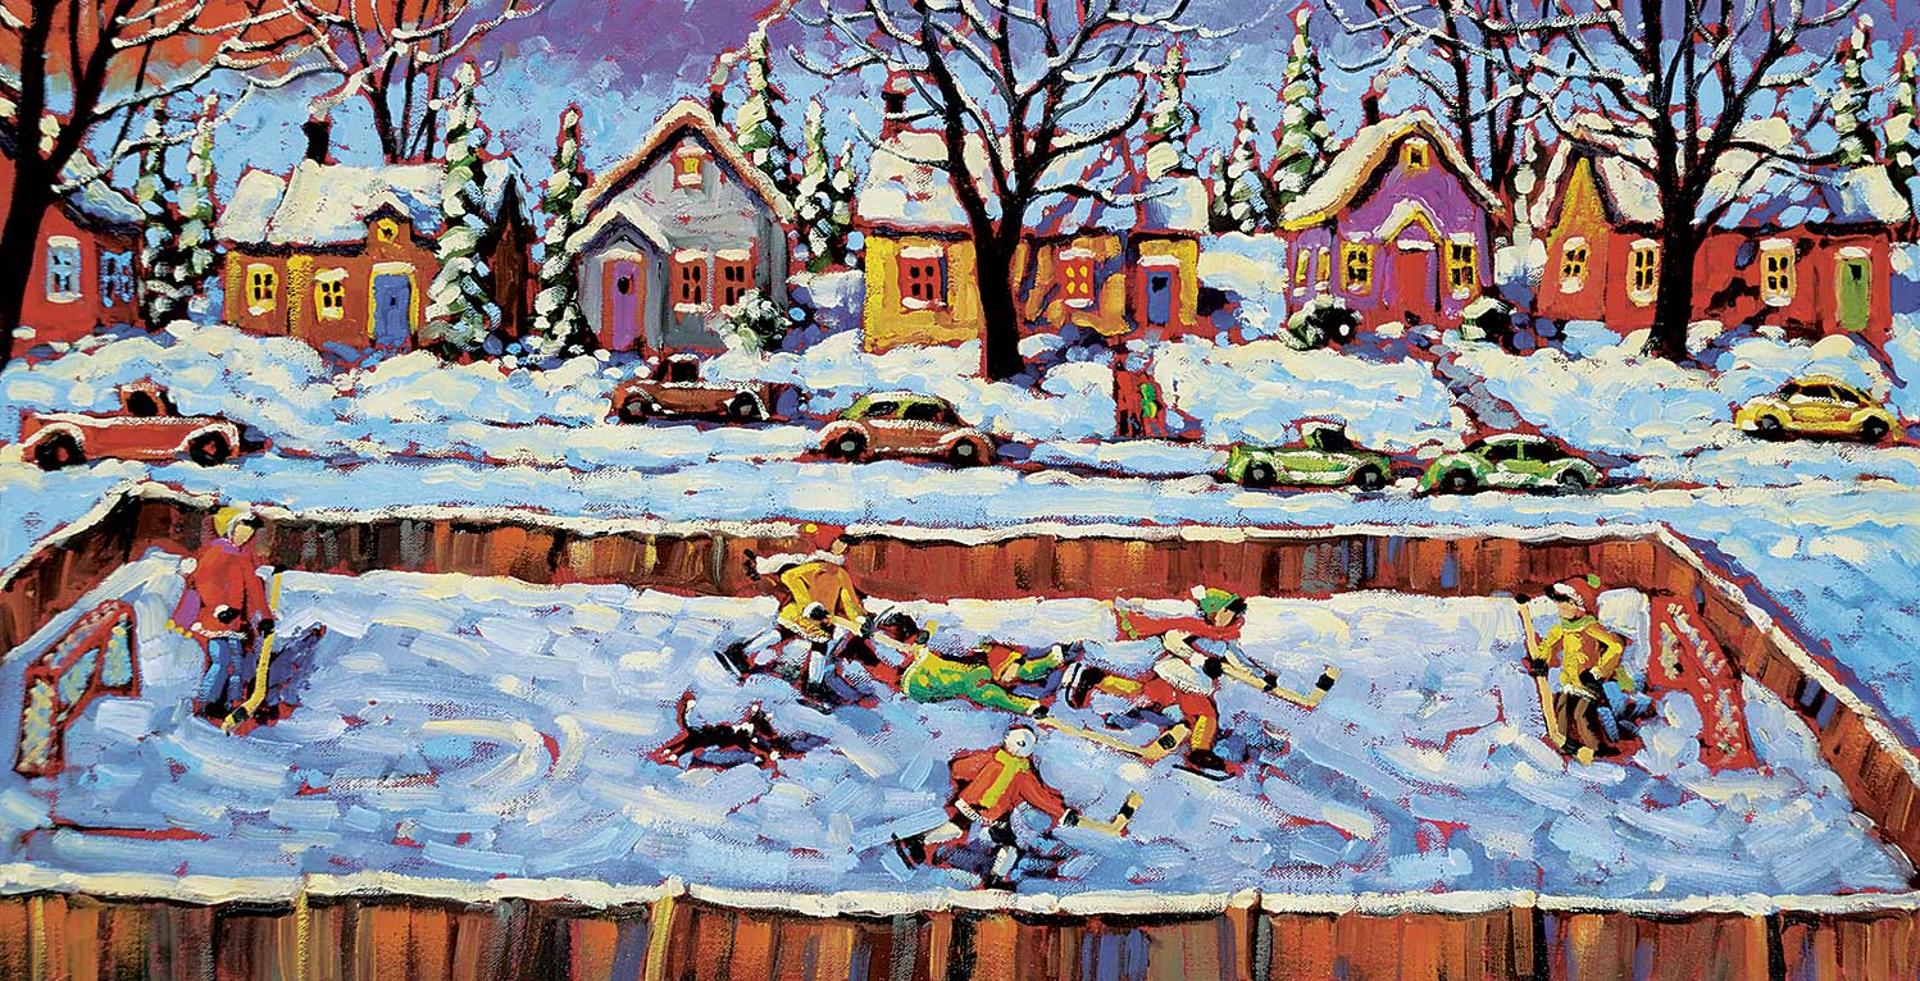 Rod Charlesworth (1955) - On a Winter Sunday